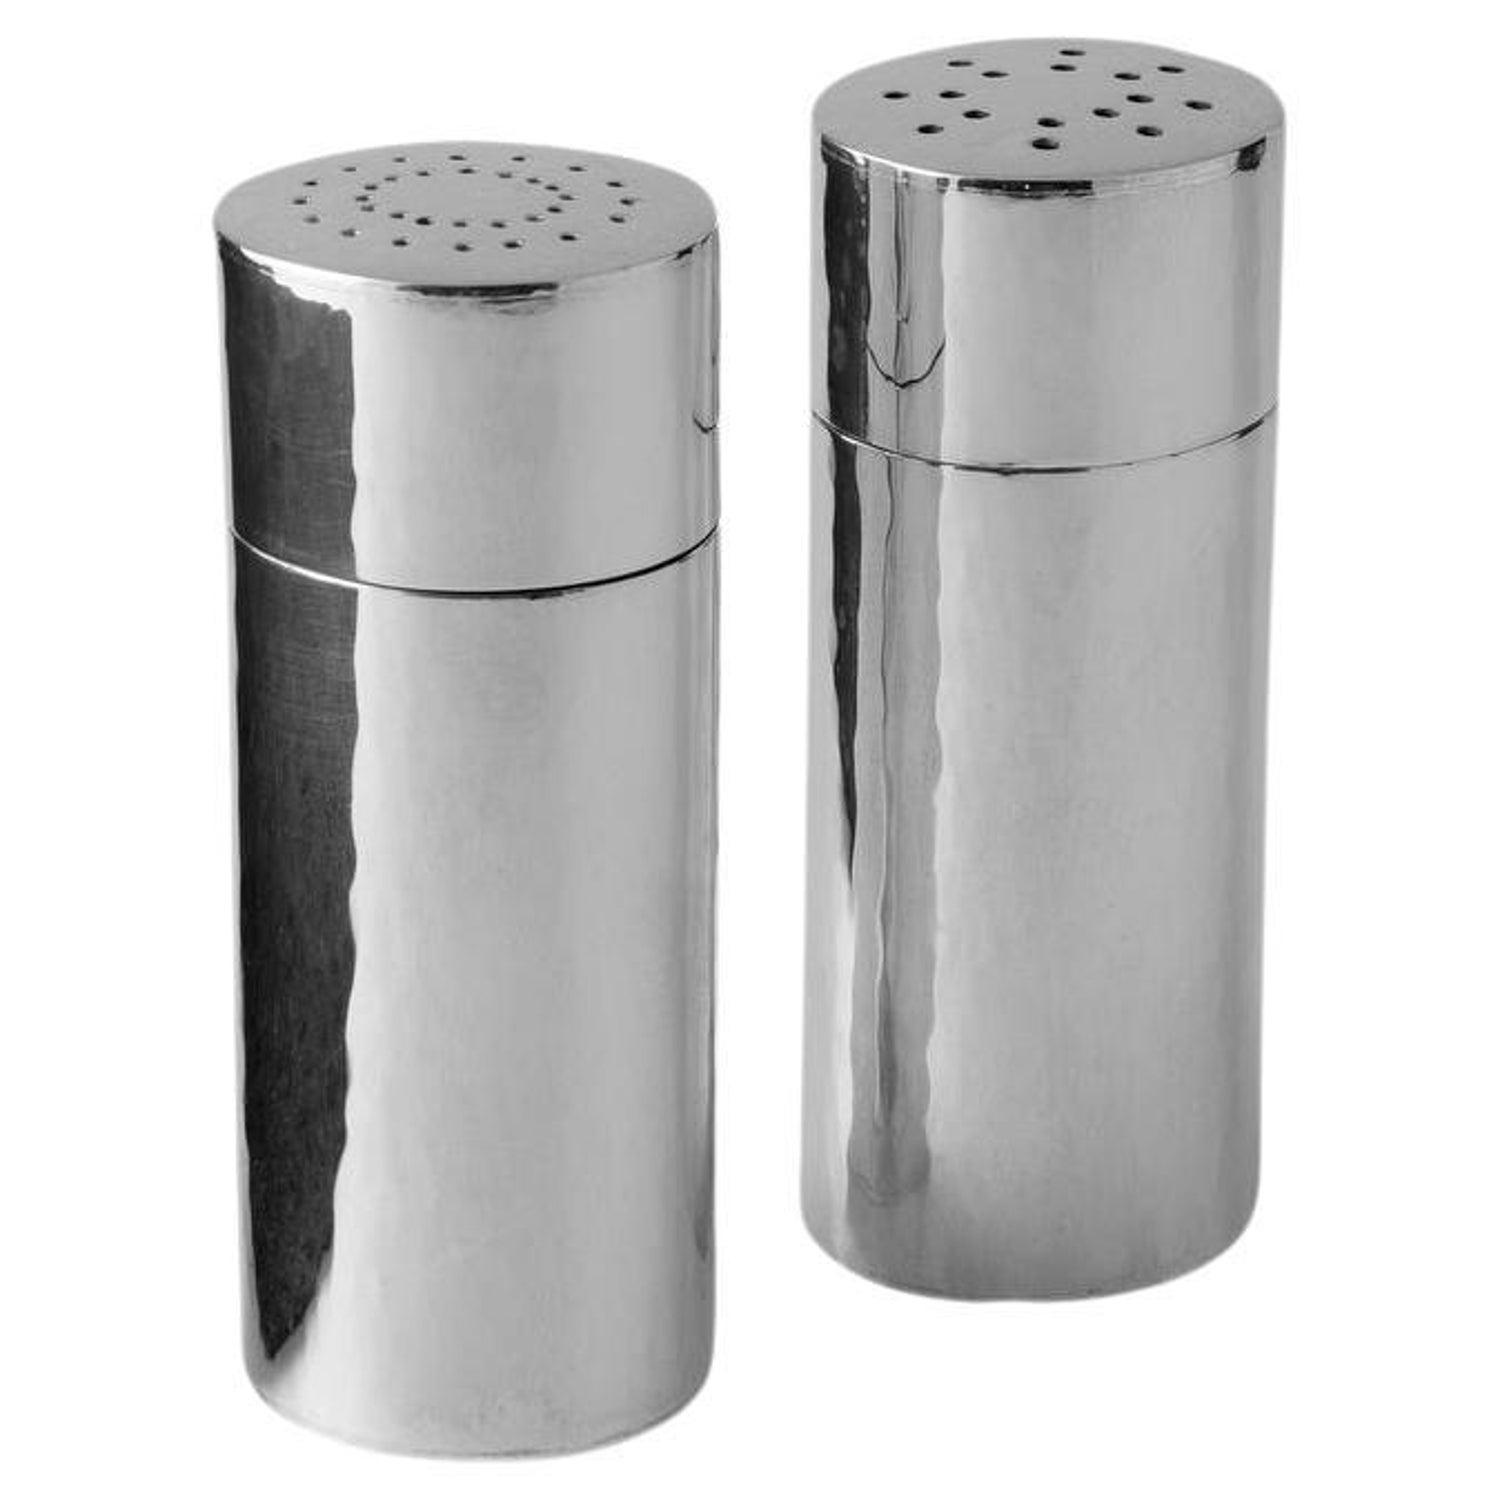 Elsa Peretti® Thumbprint salt and pepper shakers. Silver. | Tiffany & Co.